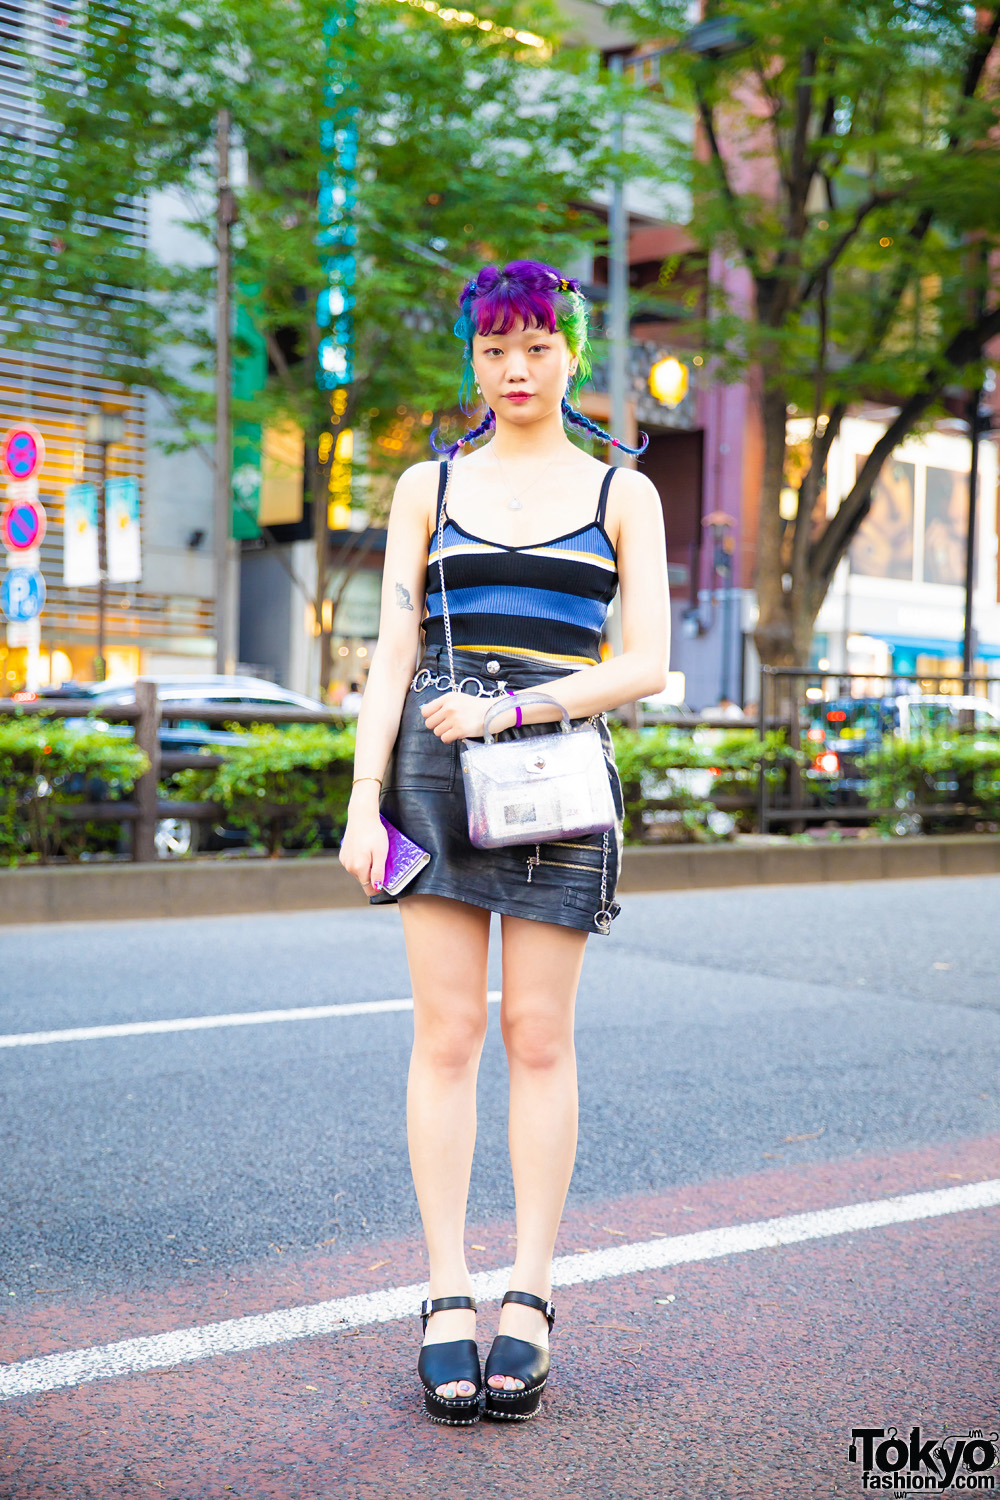 Harajuku Girl w/ Colorful Twin Braids, Striped Tank Top, Bubbles Black Leather Mini Skirt, WC Bag & Black Platform Sandals